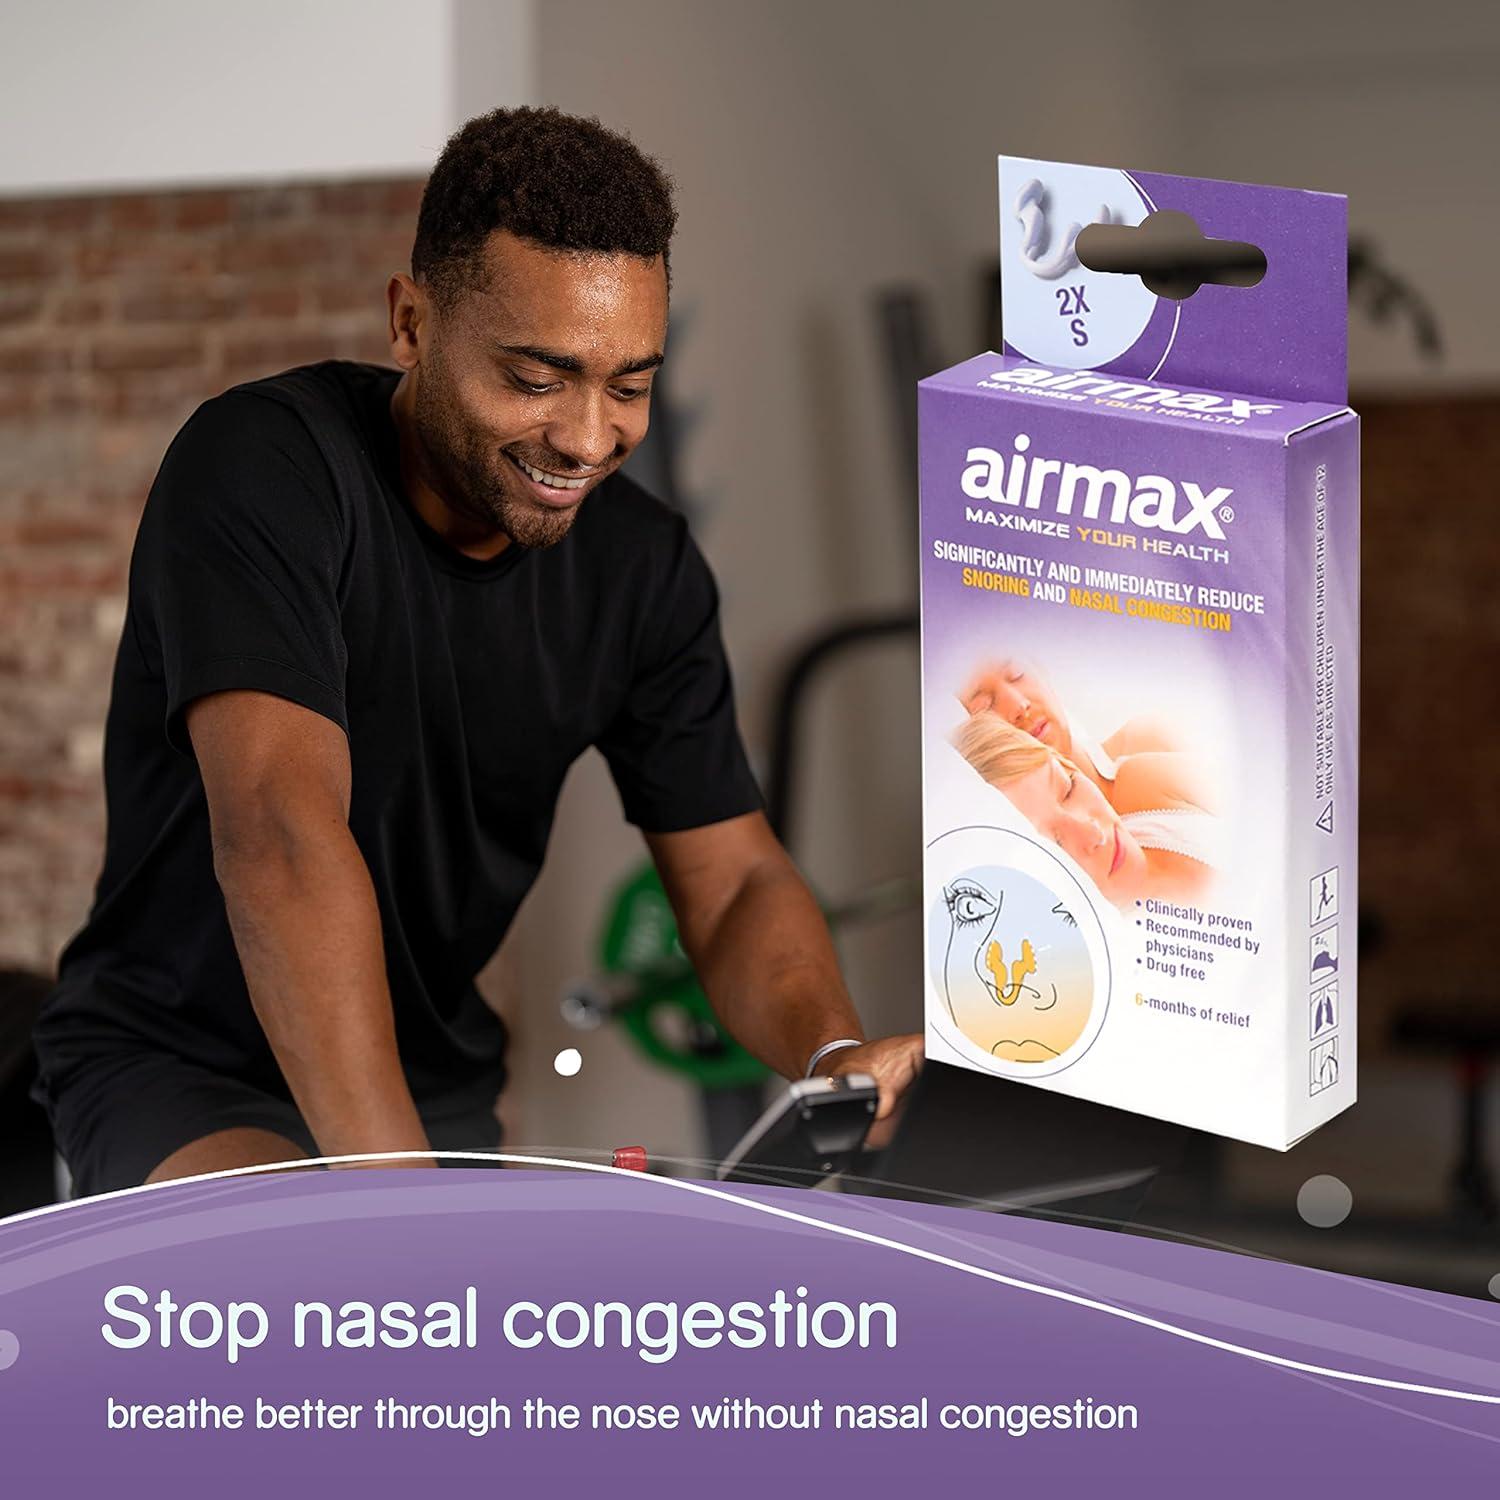 Comprar Air Max Unisex Classic Nasal Dilators Two-Pack - Anti Snoring  Device for Men and Woman - Improves Airflow - Orange - Medium en USA desde  Costa Rica